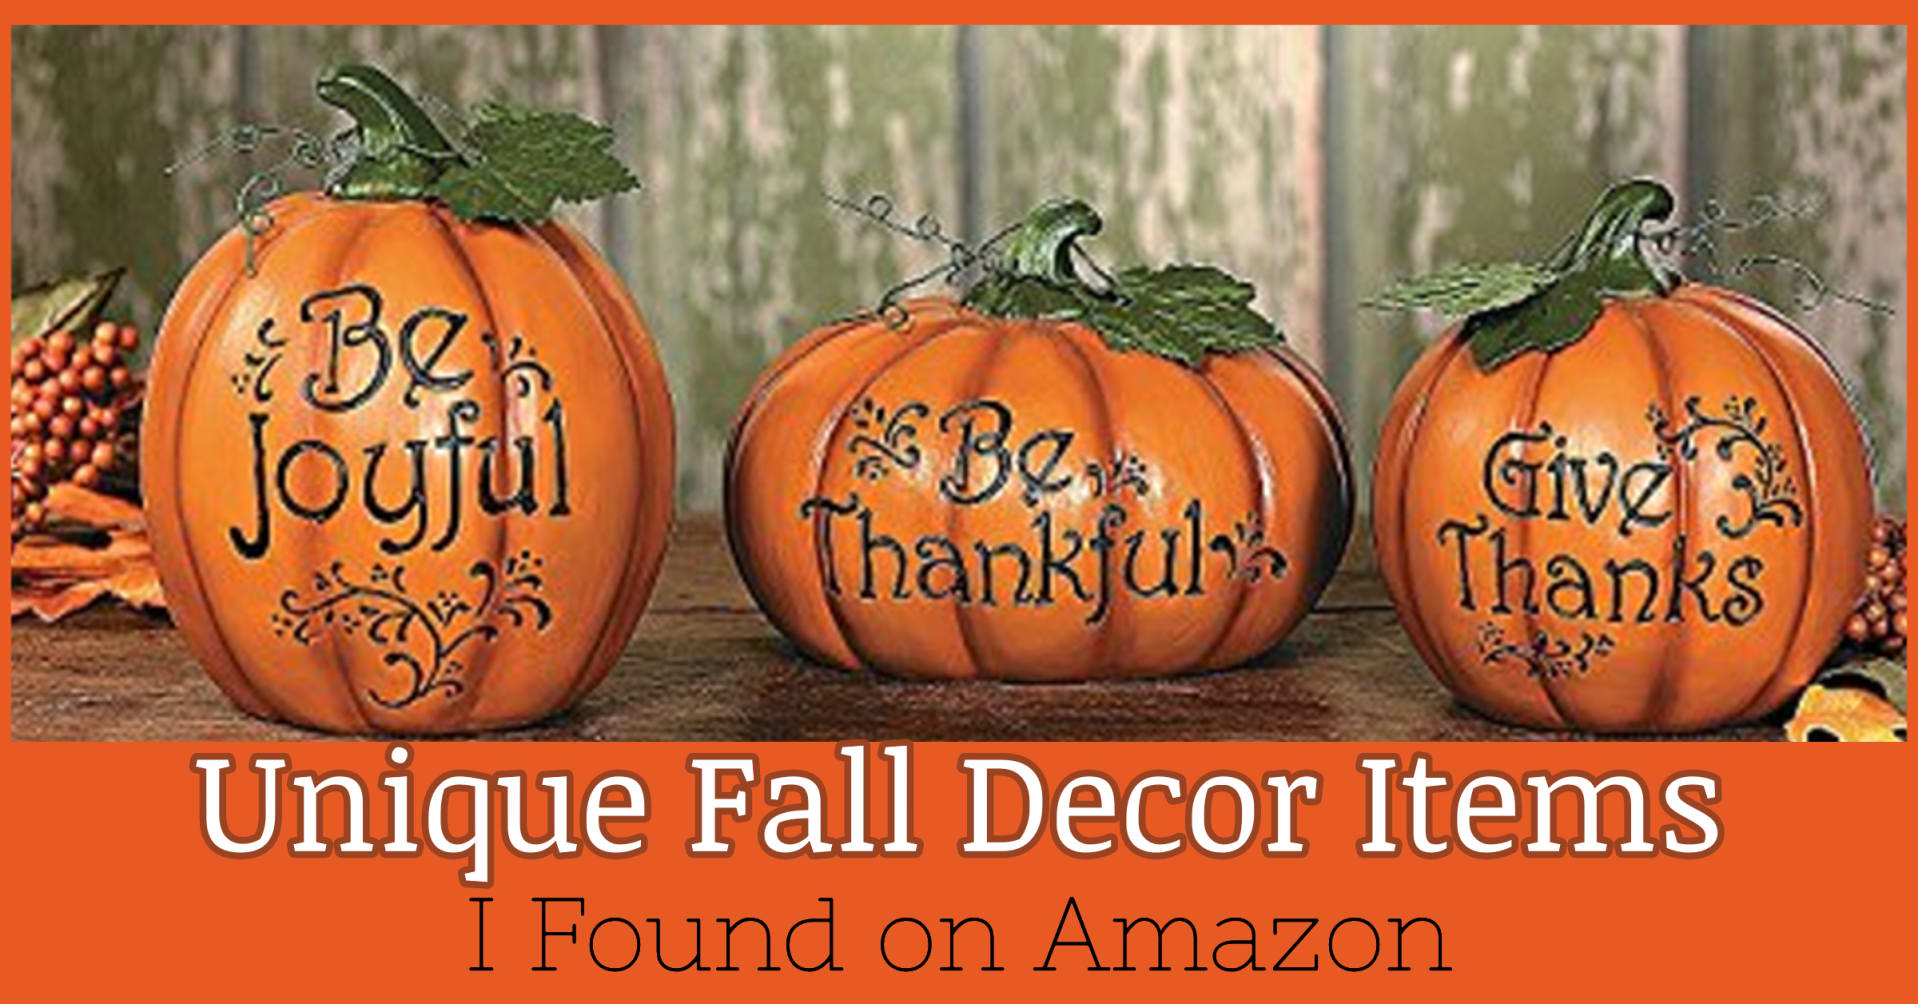 Autumn Decor Ideas - 21 Unique Autumn Decorations I Found On Amazon